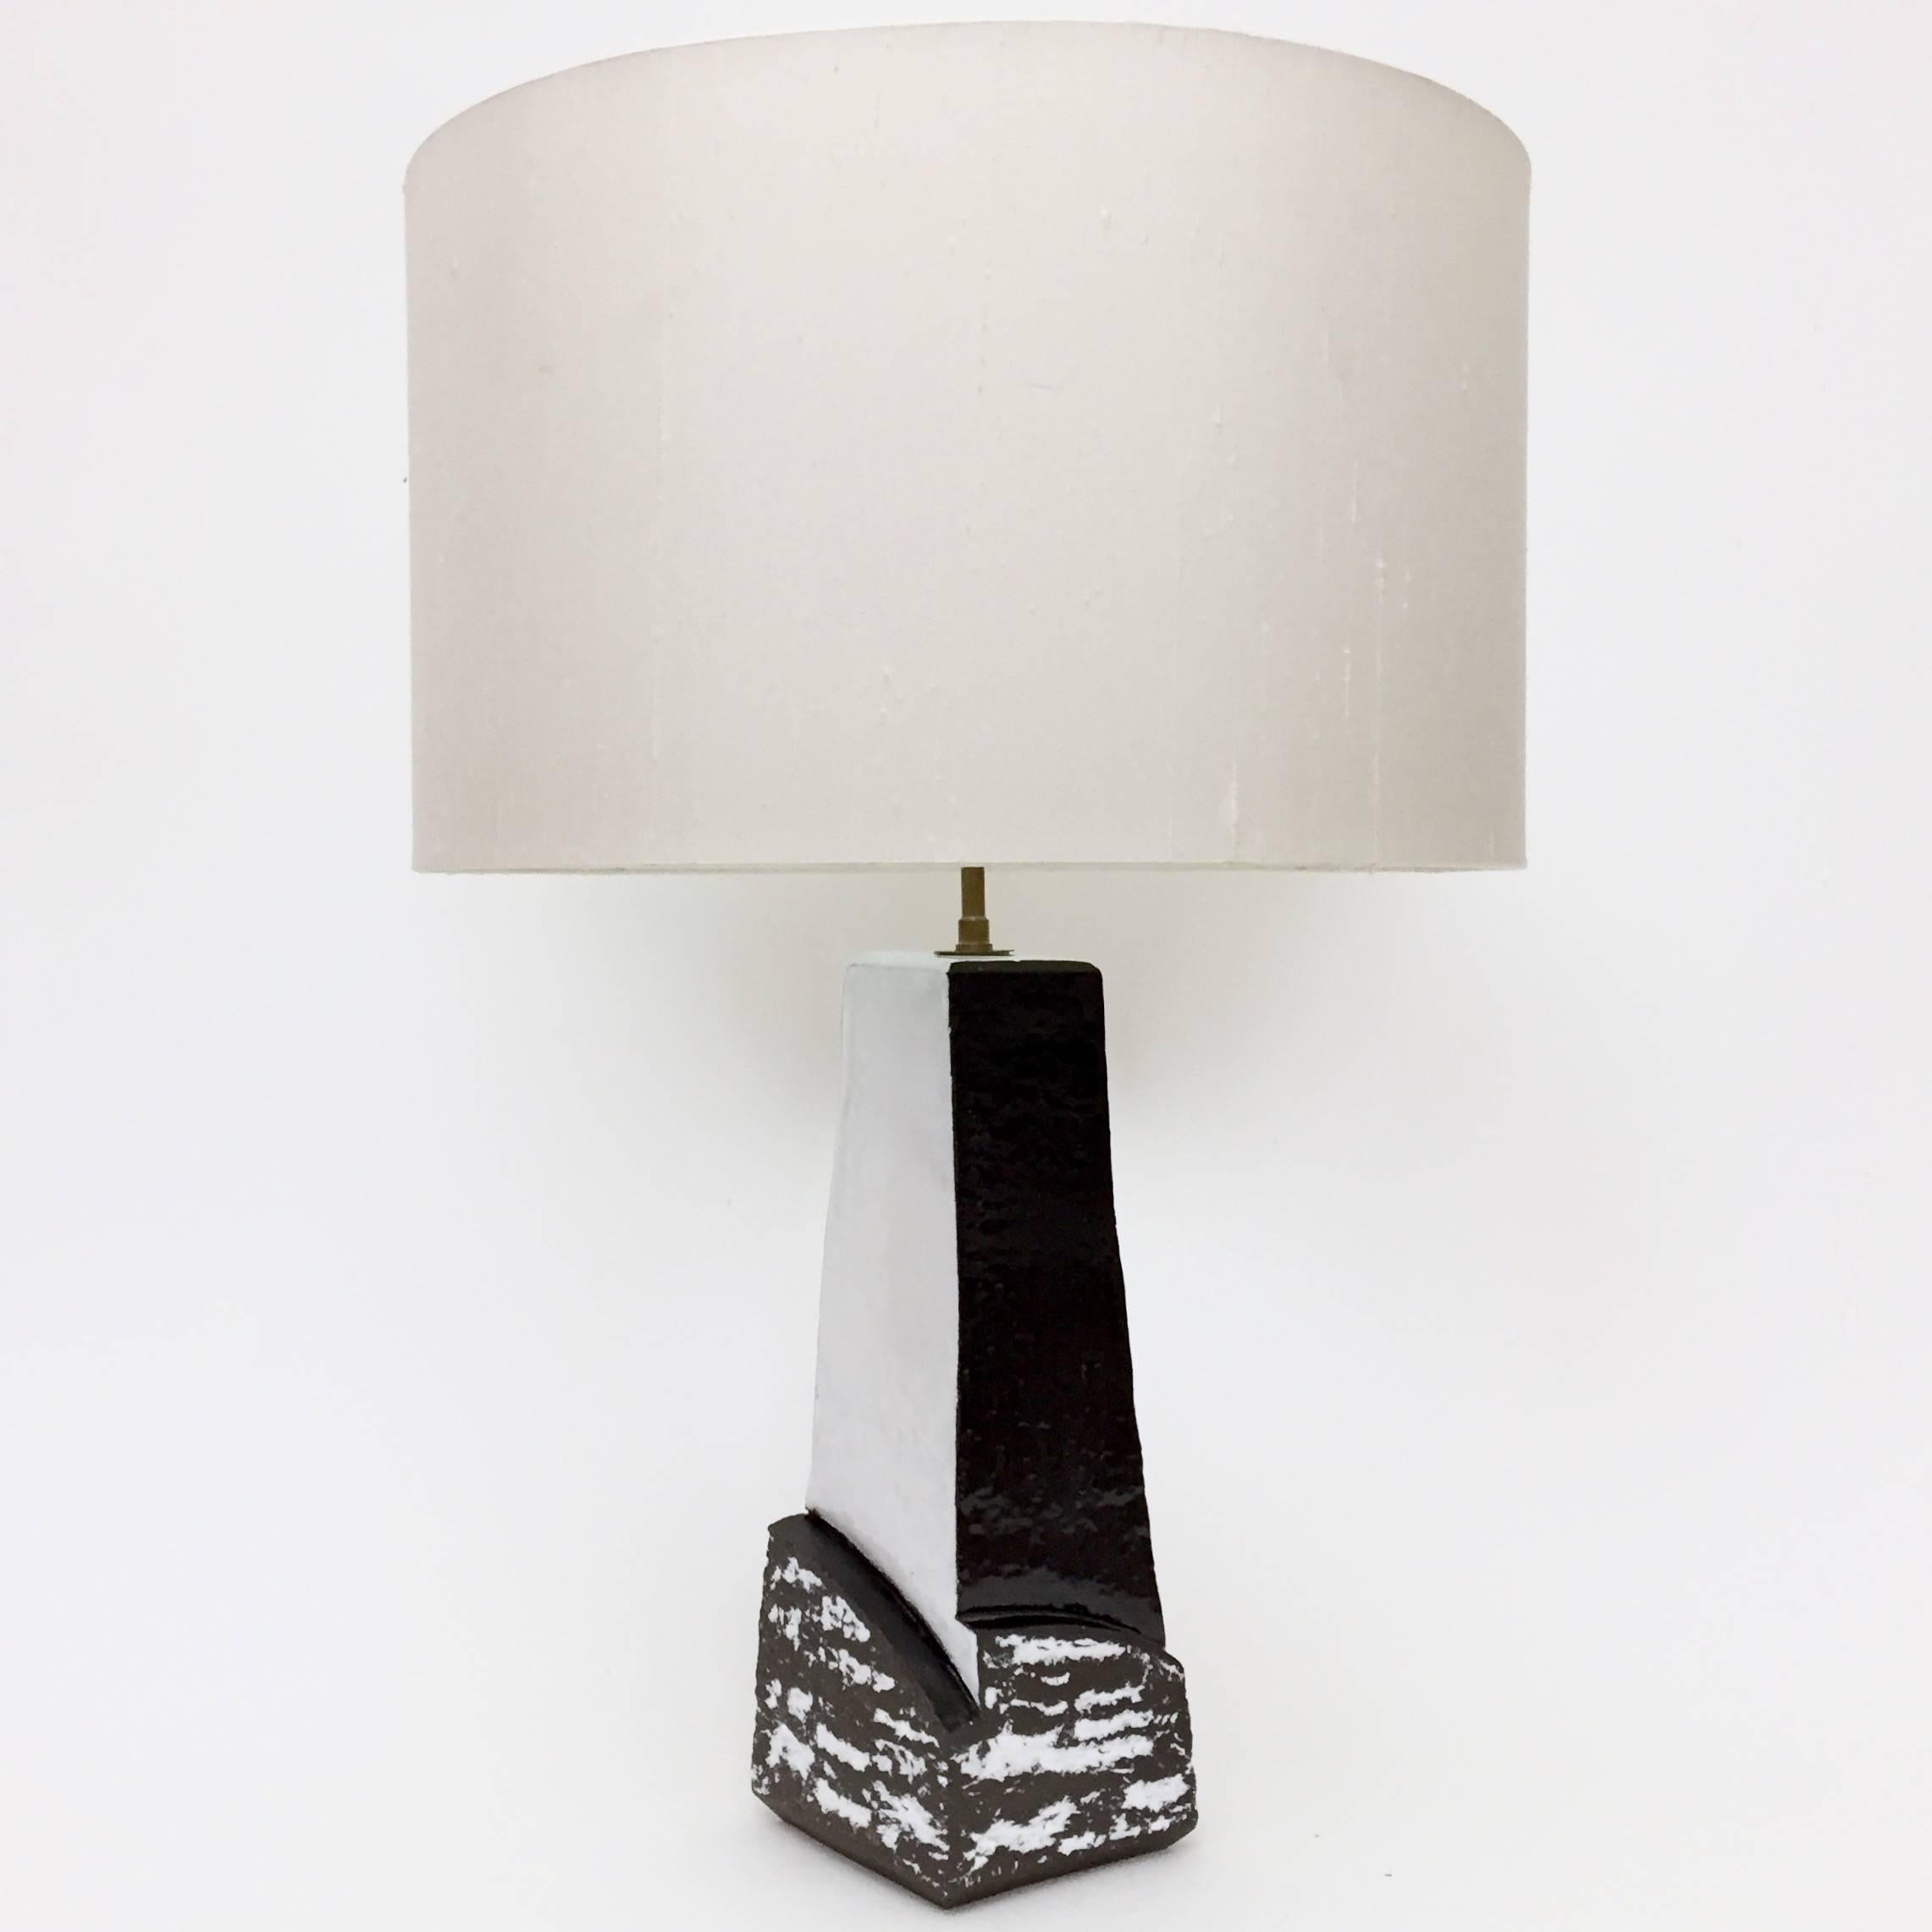 Enameled Pair of Ceramic Lamp Bases Glazed in Black and White